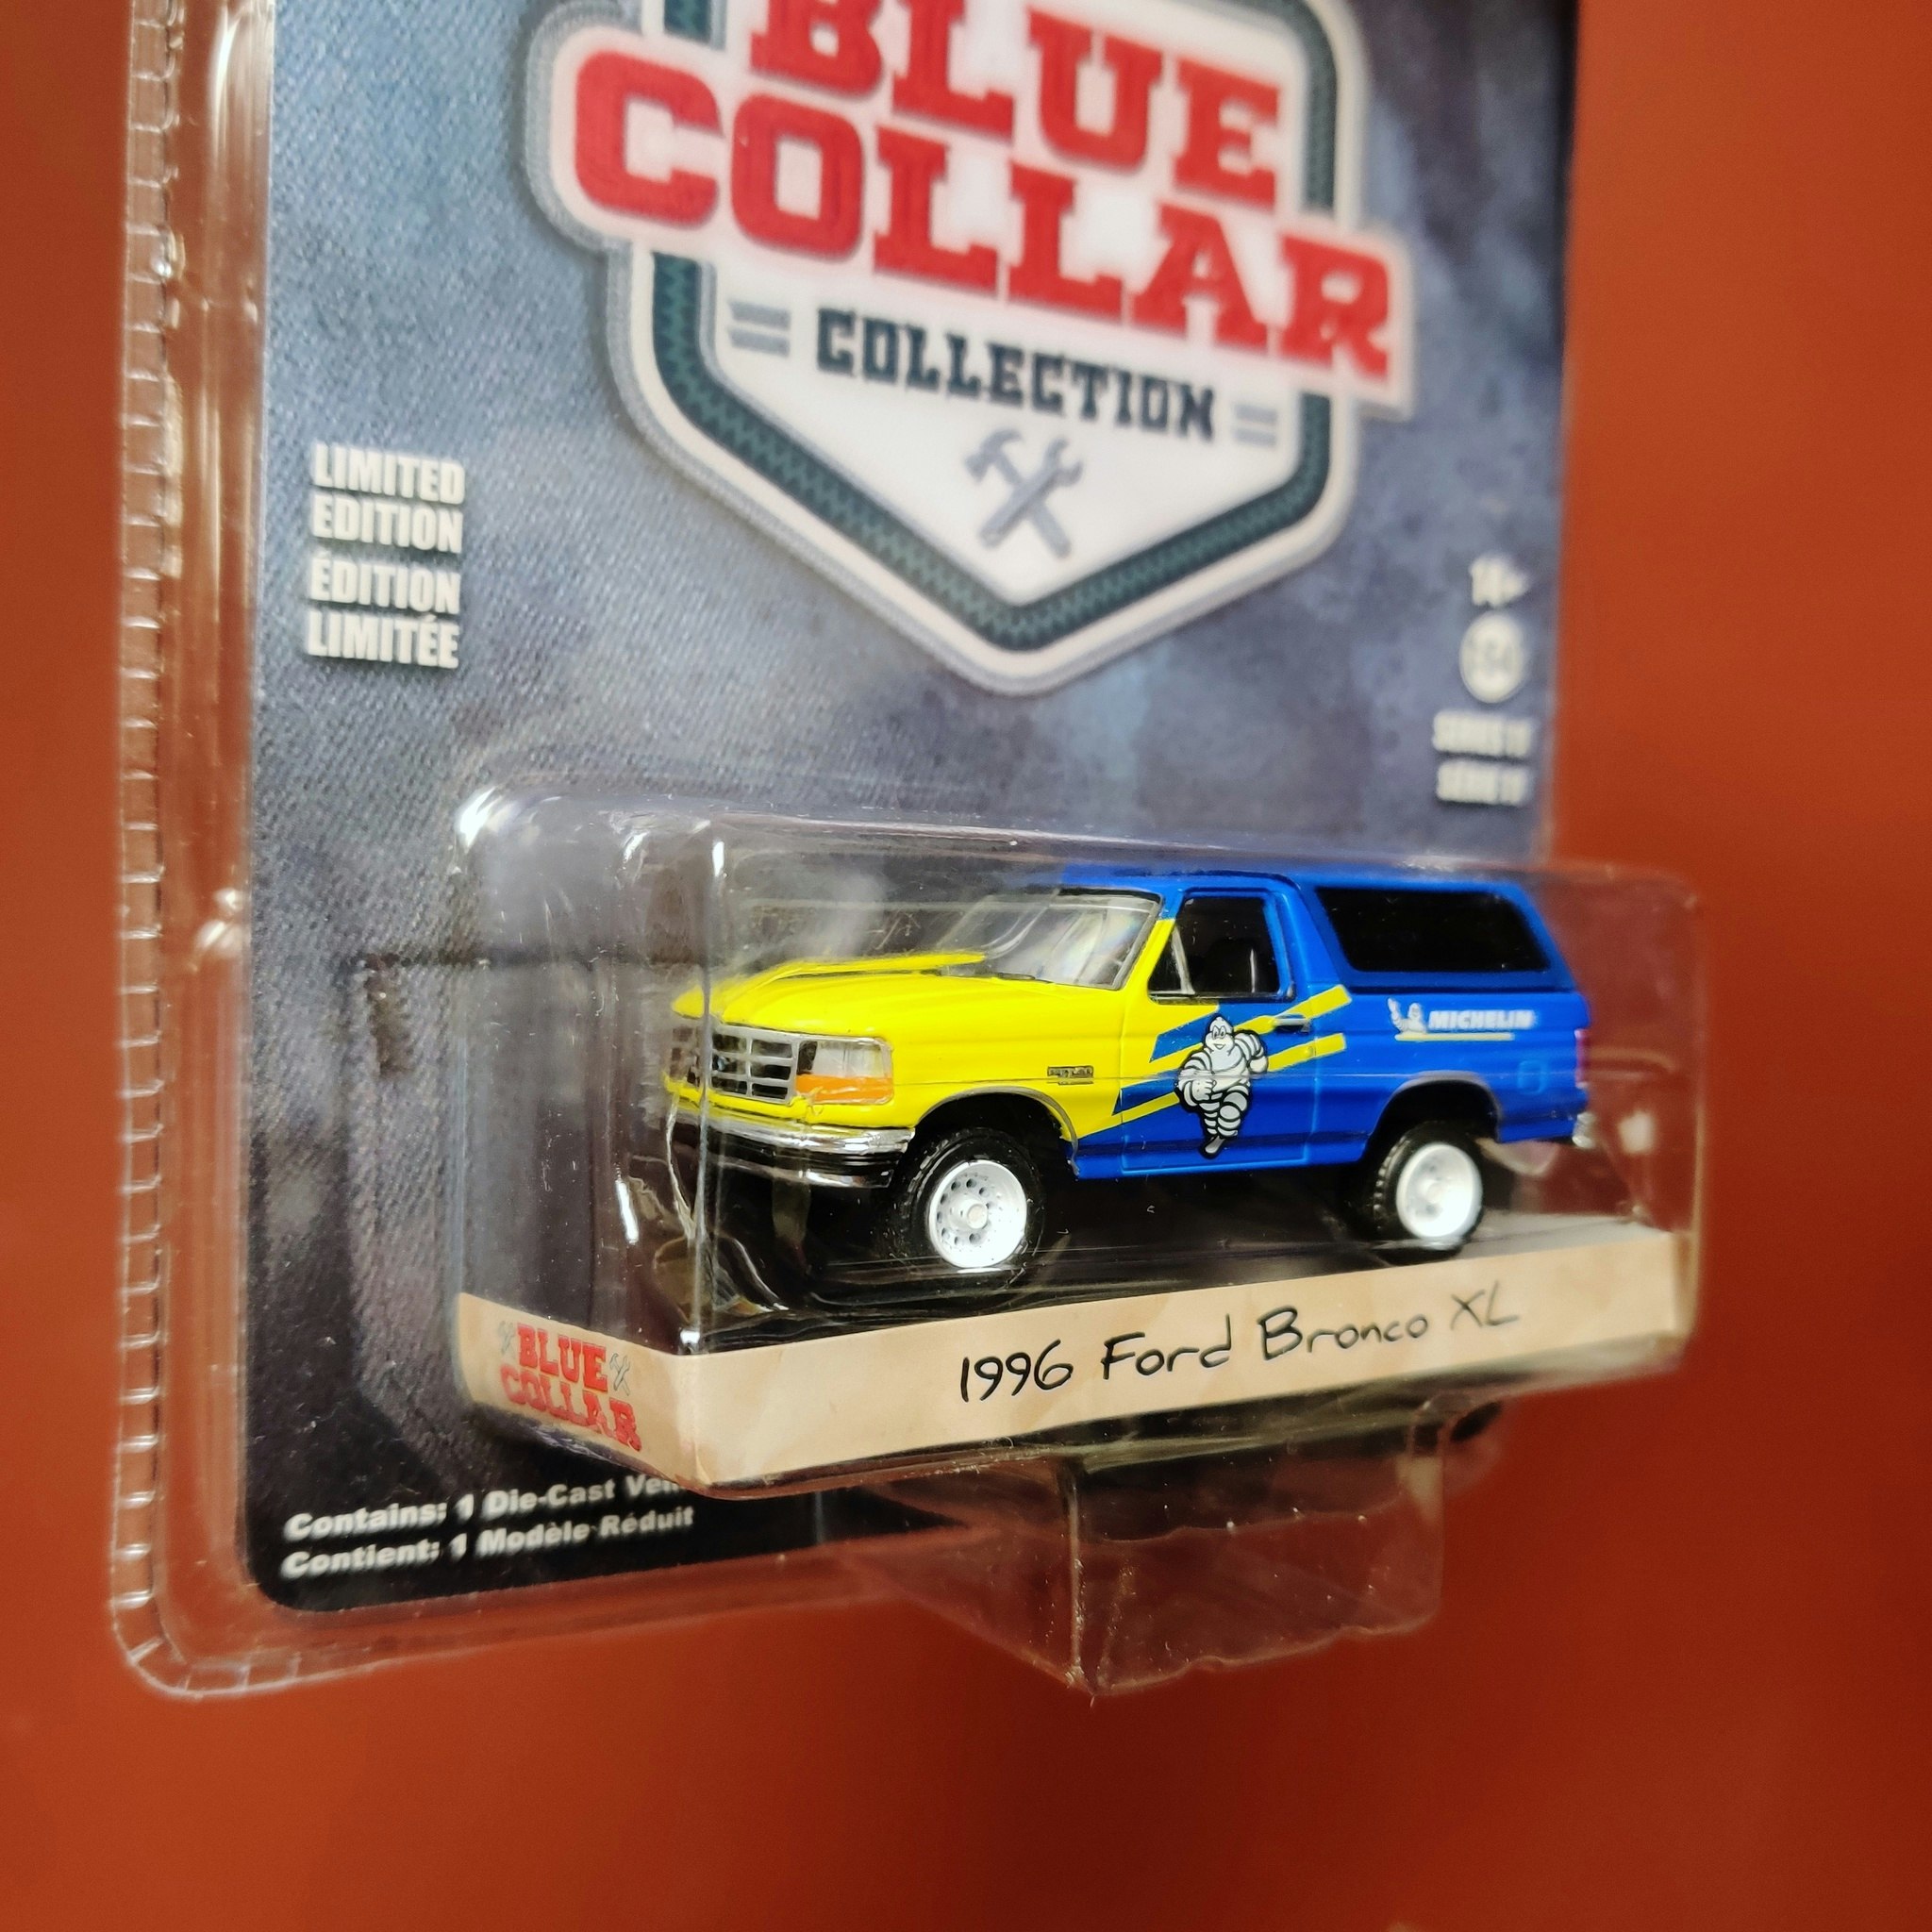 Skala 1/64 Ford Bronco XL 96 Michelin "Blue Collar Collection" från Greenlight